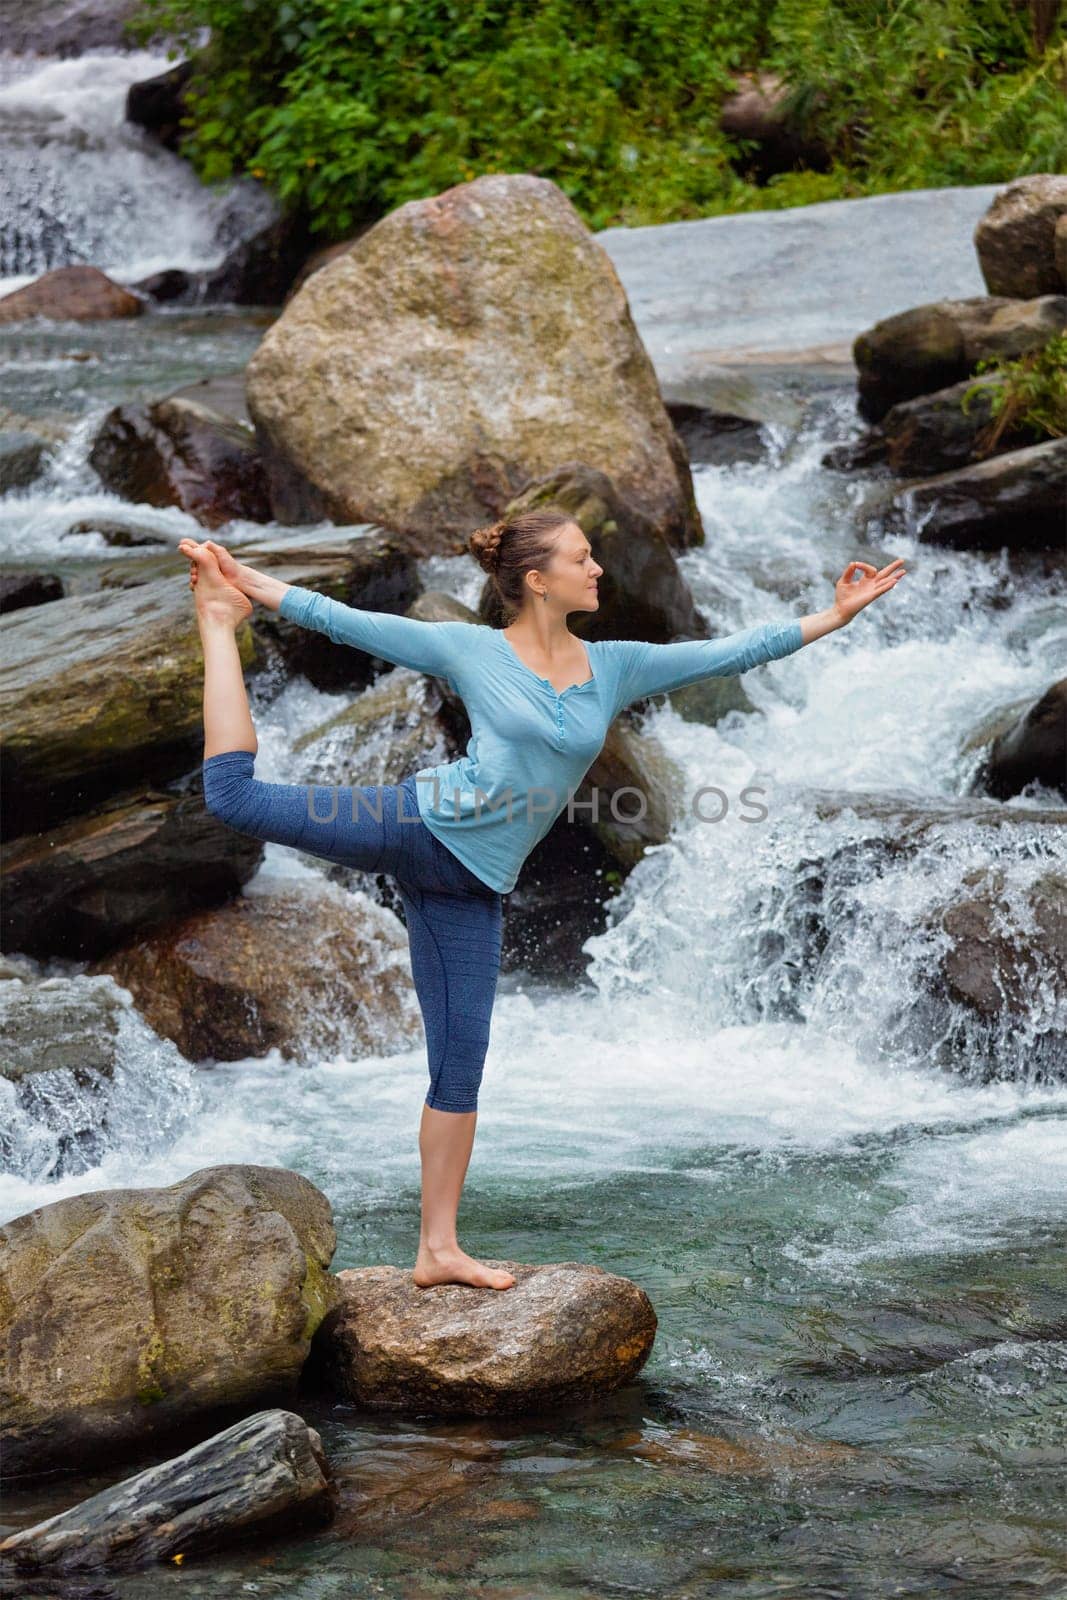 Yoga outdoors - woman doing yoga asana Natarajasana - Lord of the dance balance pose outdoors at waterfall in Himalayas